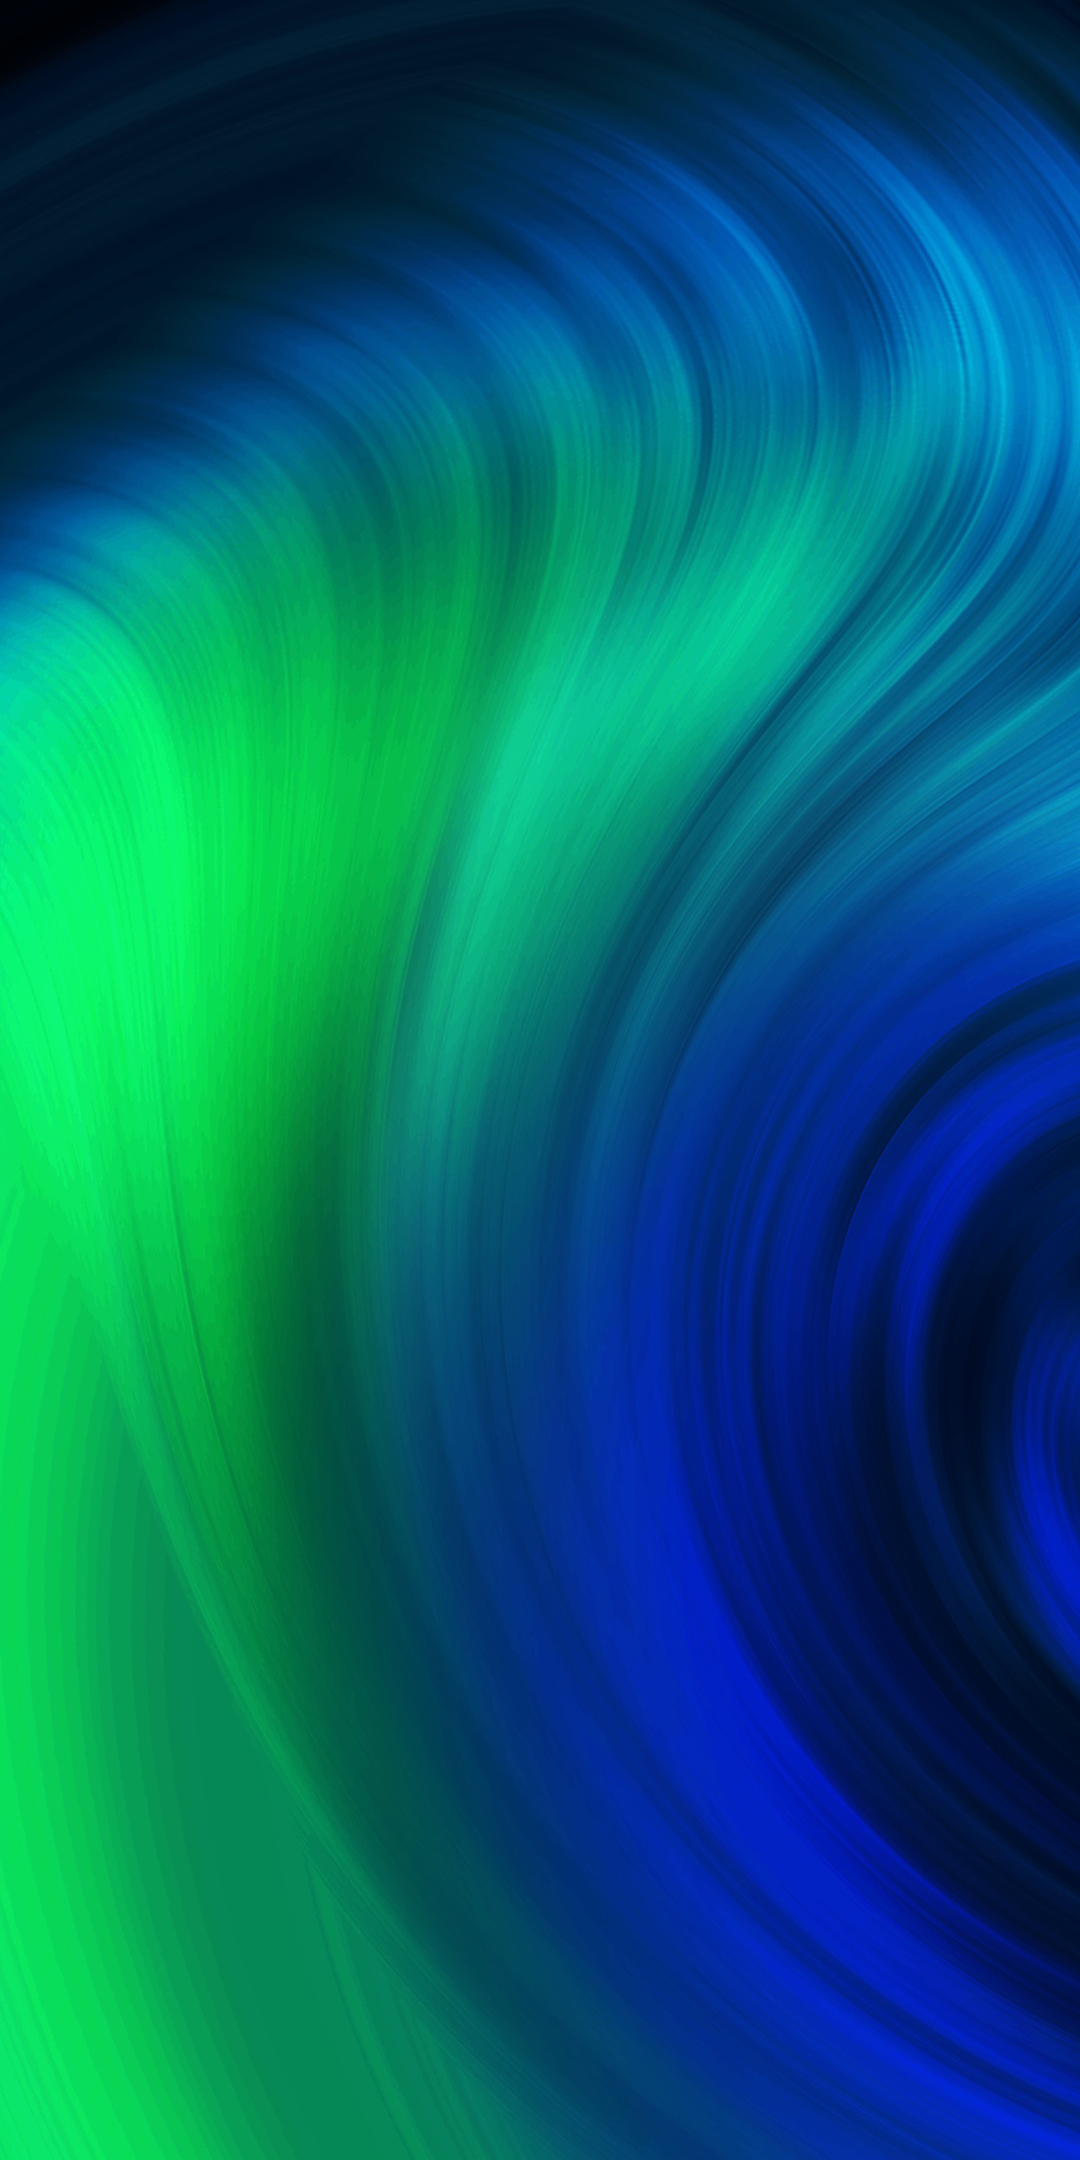 fond d'écran huawei mate 8,bleu,vert,aqua,turquoise,bleu électrique